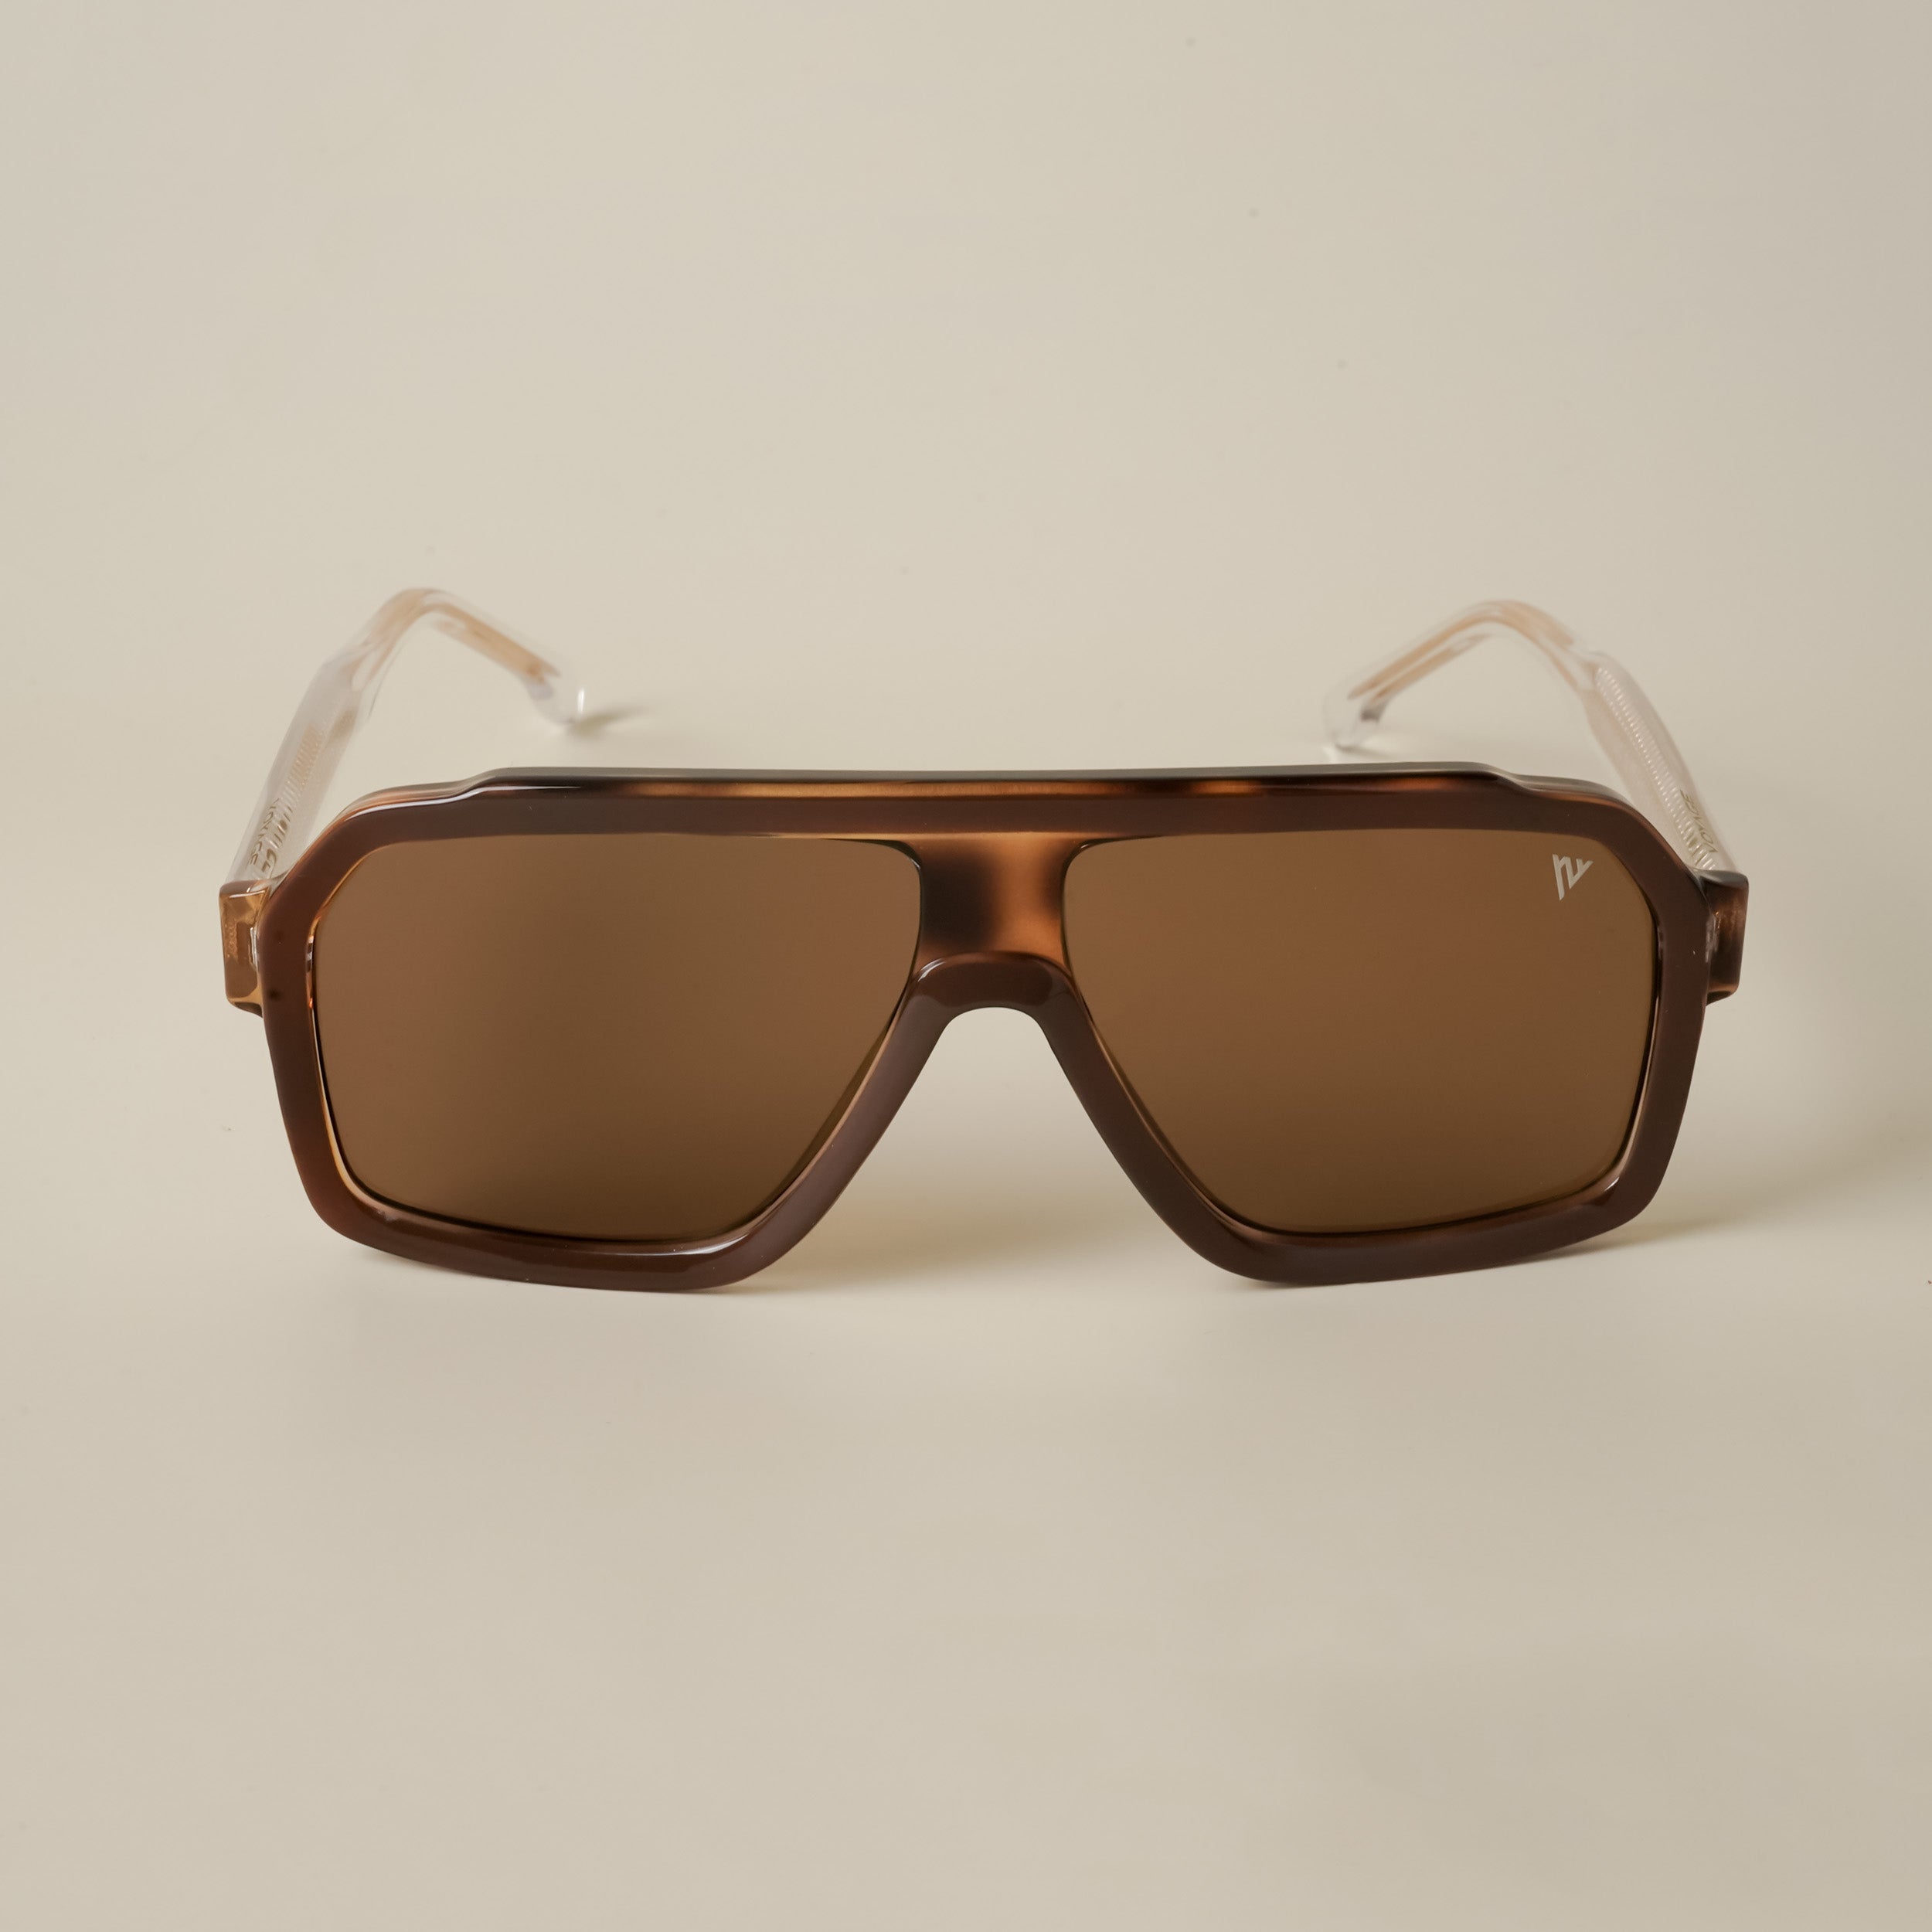 Voyage Brown Wrap Around Sunglasses for Men & Women (58974MG4744)